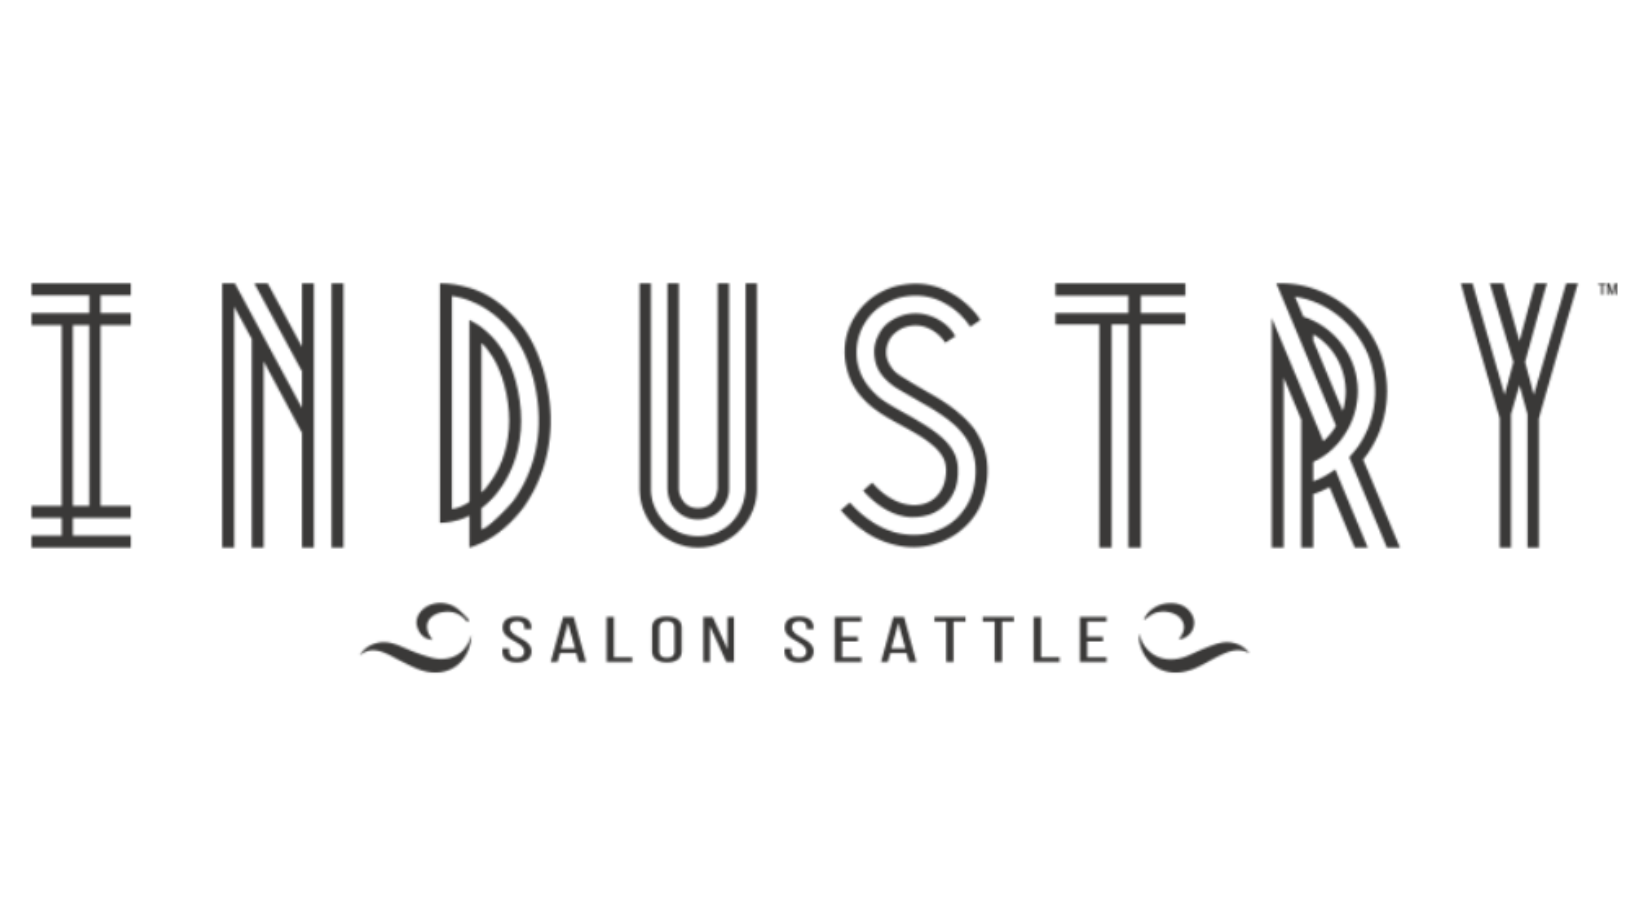 Industry Salon Seattle